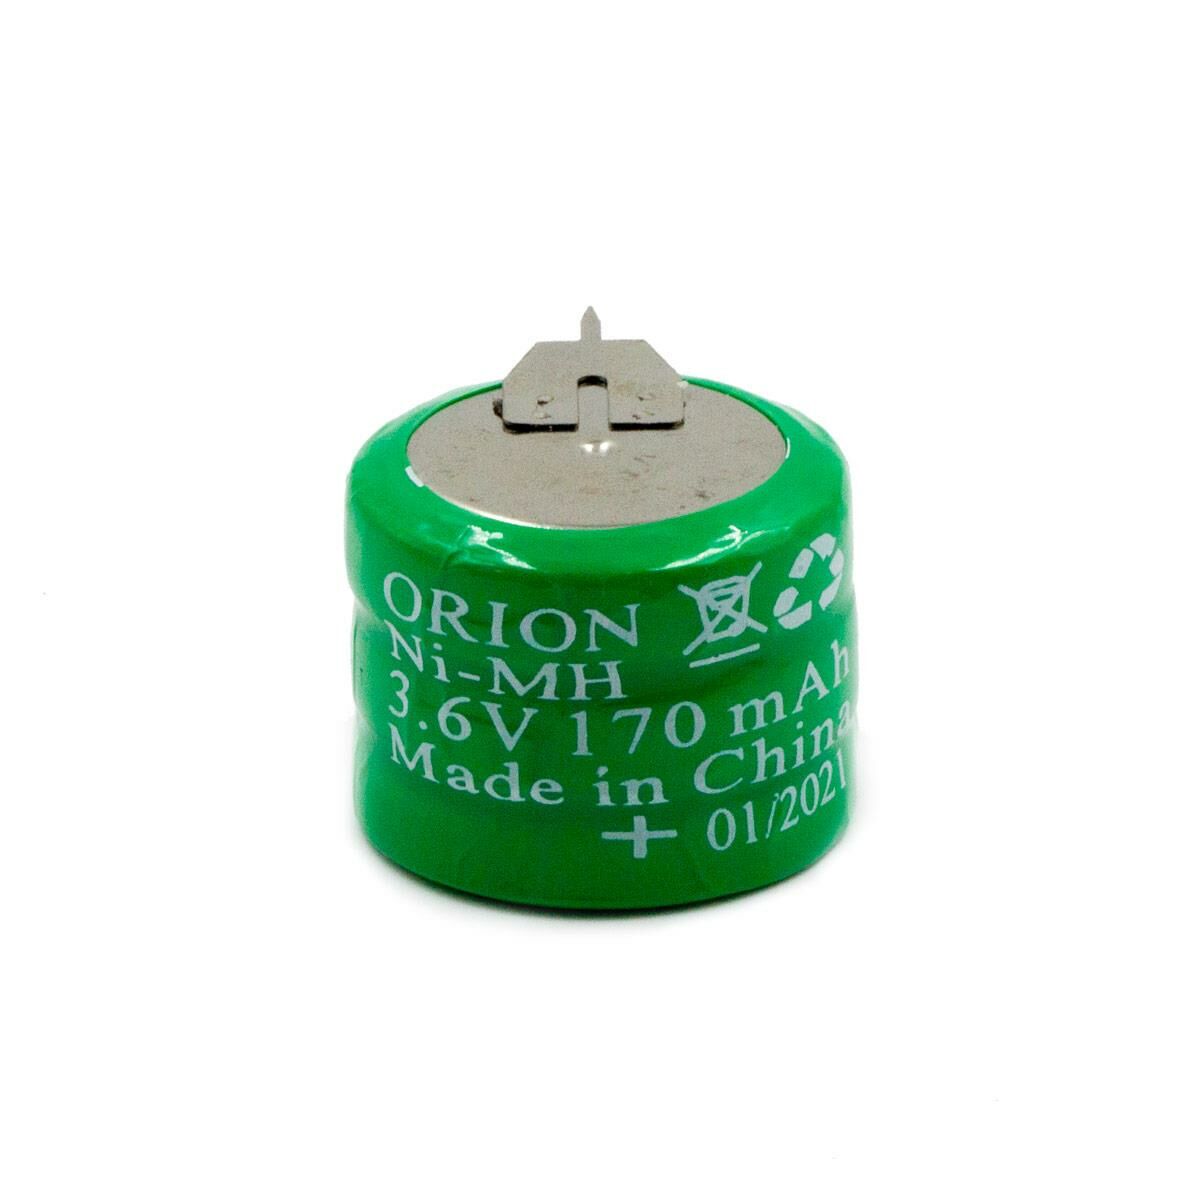 ORION 3.6V 170mAh 3 Pinli Ni-Mh Şarjlı Buton Pil